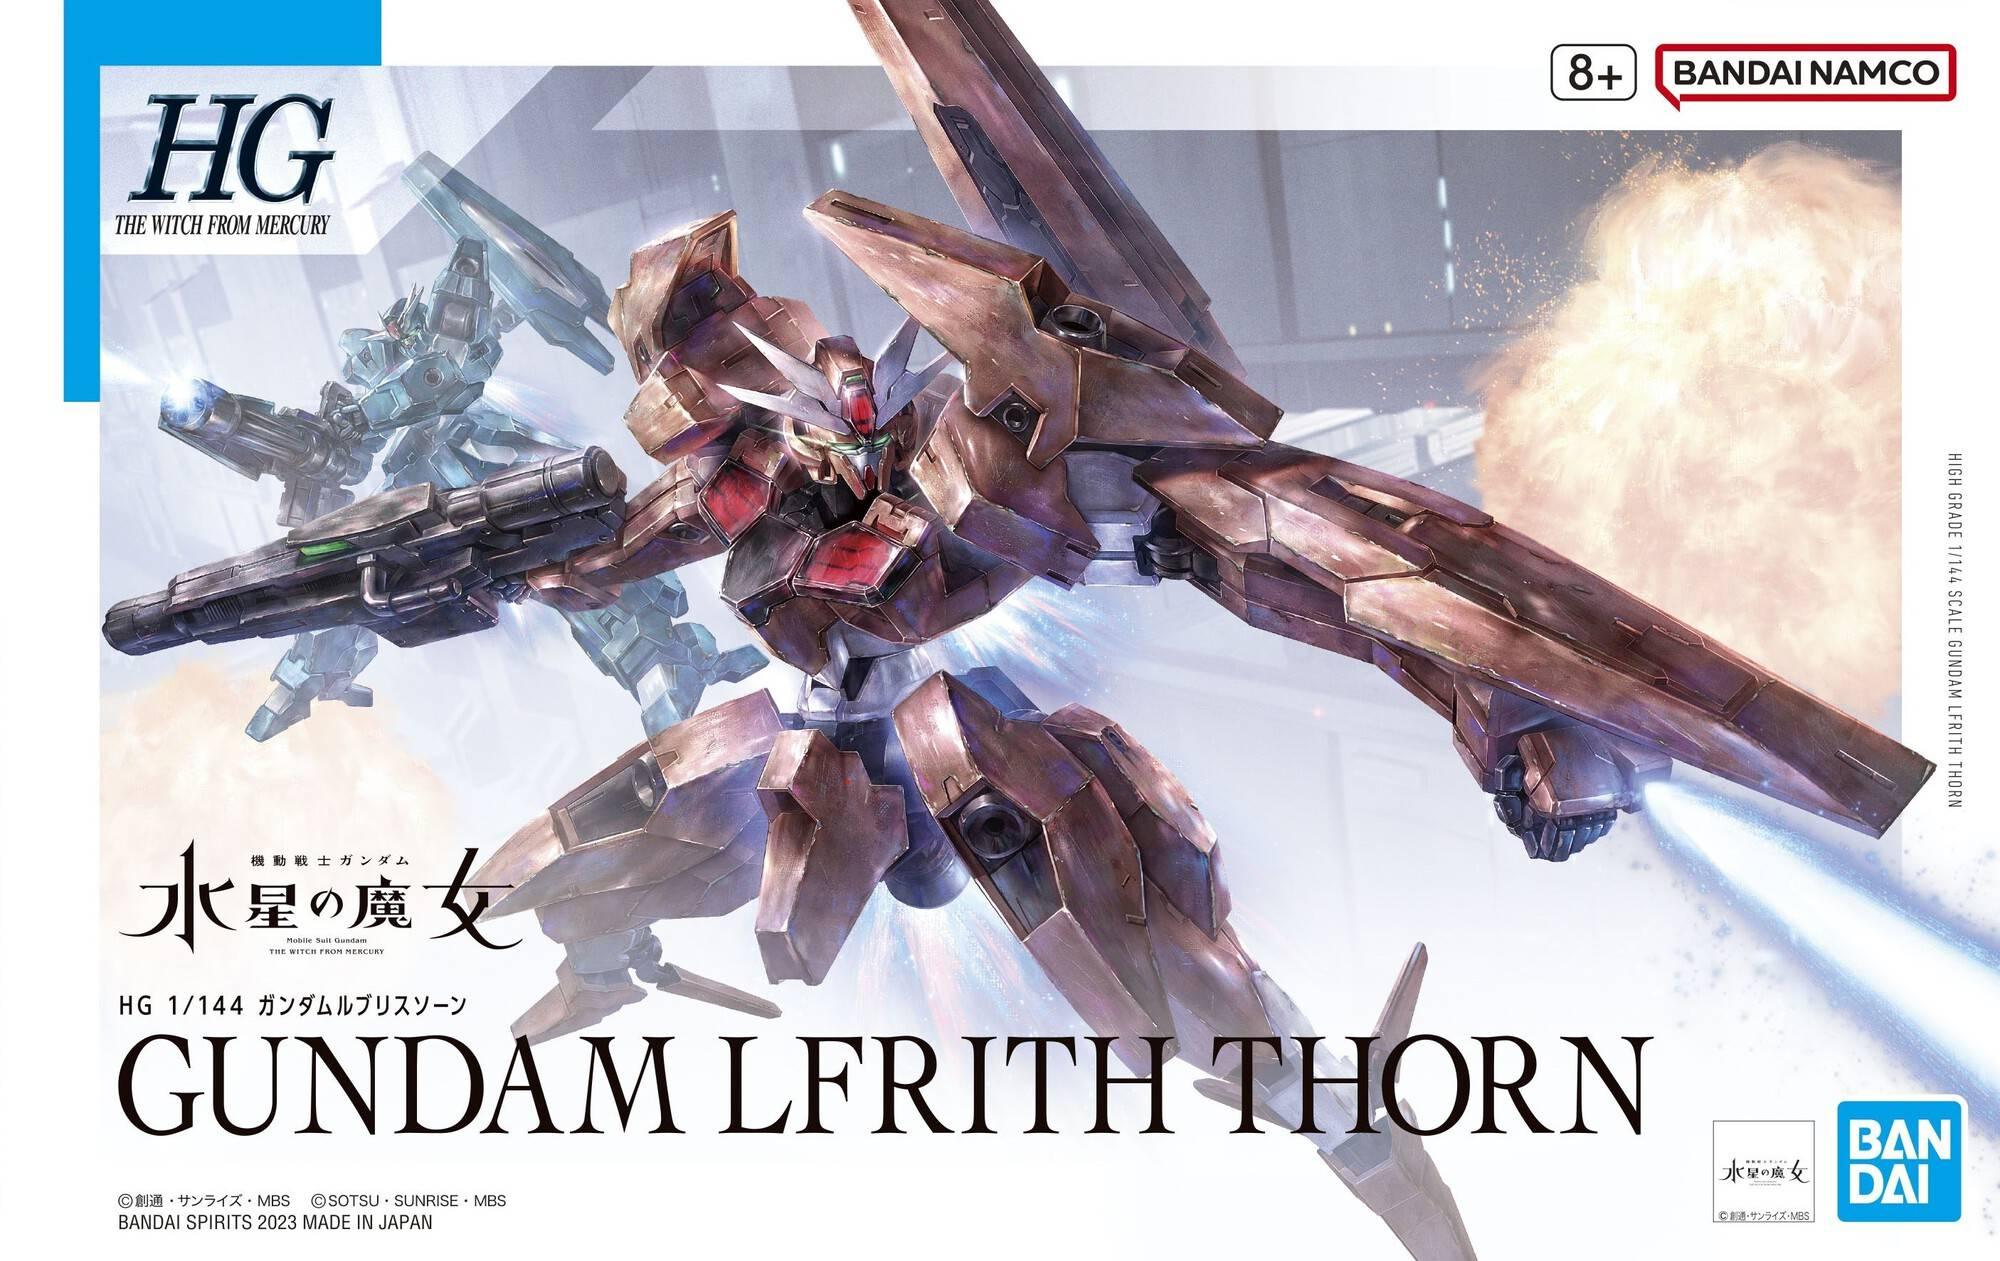 HGTWFM #18 Gundam Lfrith Thorn – Gundam Extra-Your BEST Gunpla